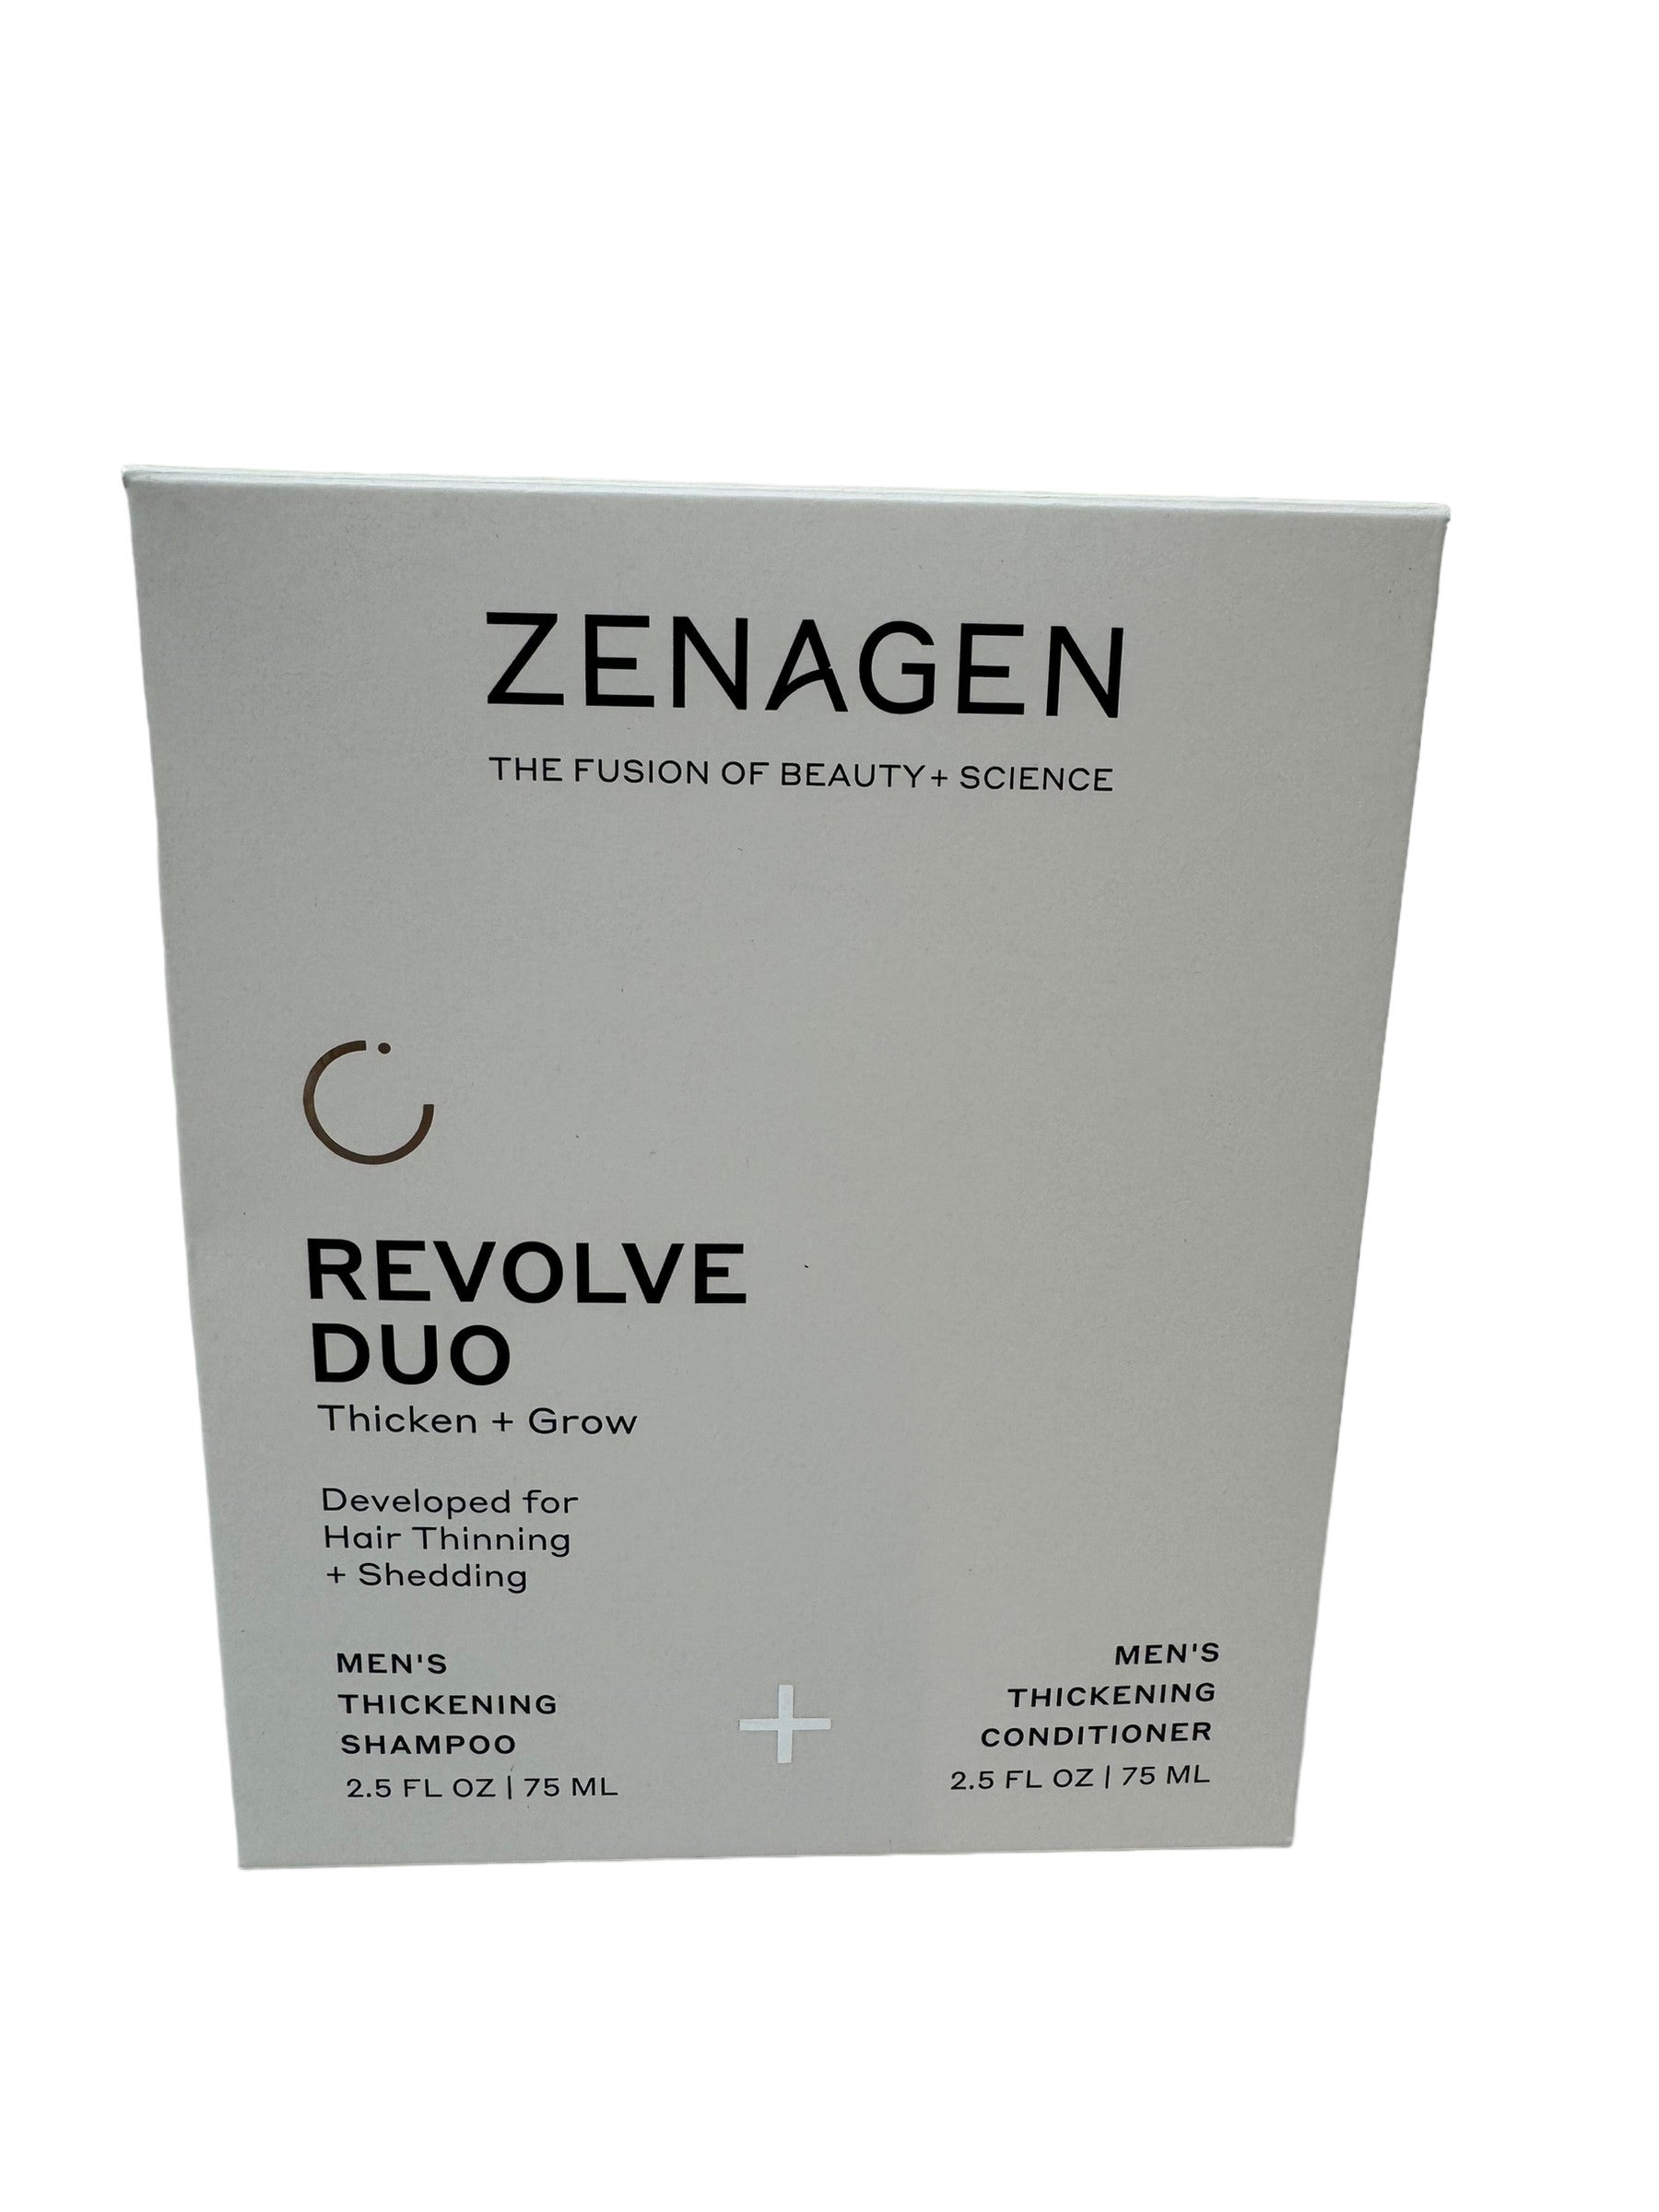 Zenagen Revolve Shampoo Treatment For Men & Thickening Conditioner 2.5 oz - DUO